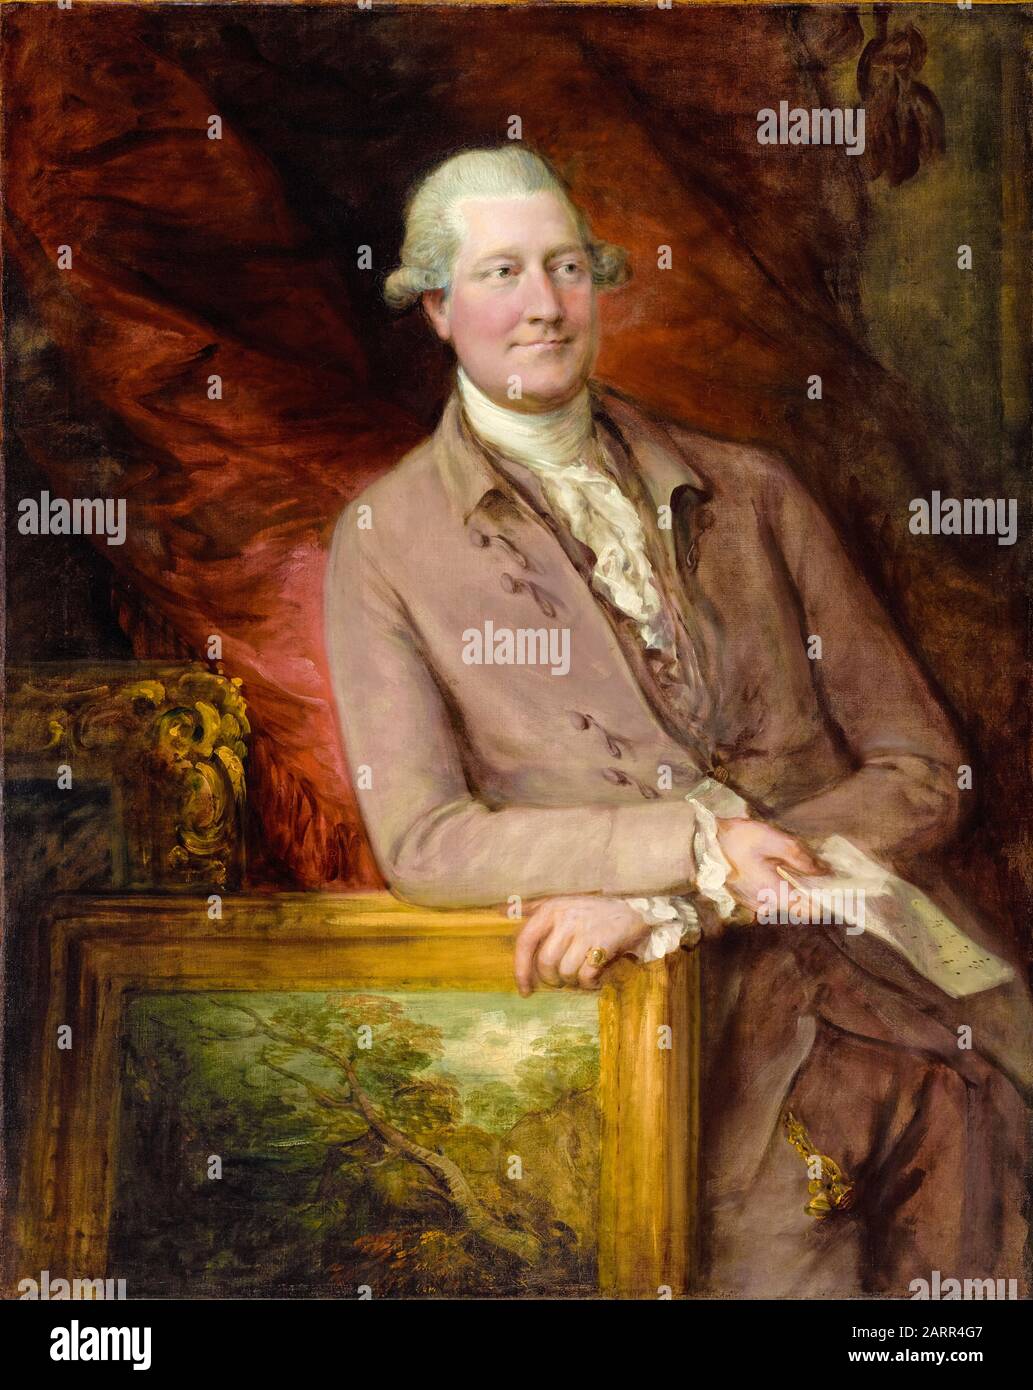 Thomas Gainsborough, James Christie (1730-1803), (Gründer von Christies Auctioneers) Auktionator, Porträtmalerei 1778 Stockfoto